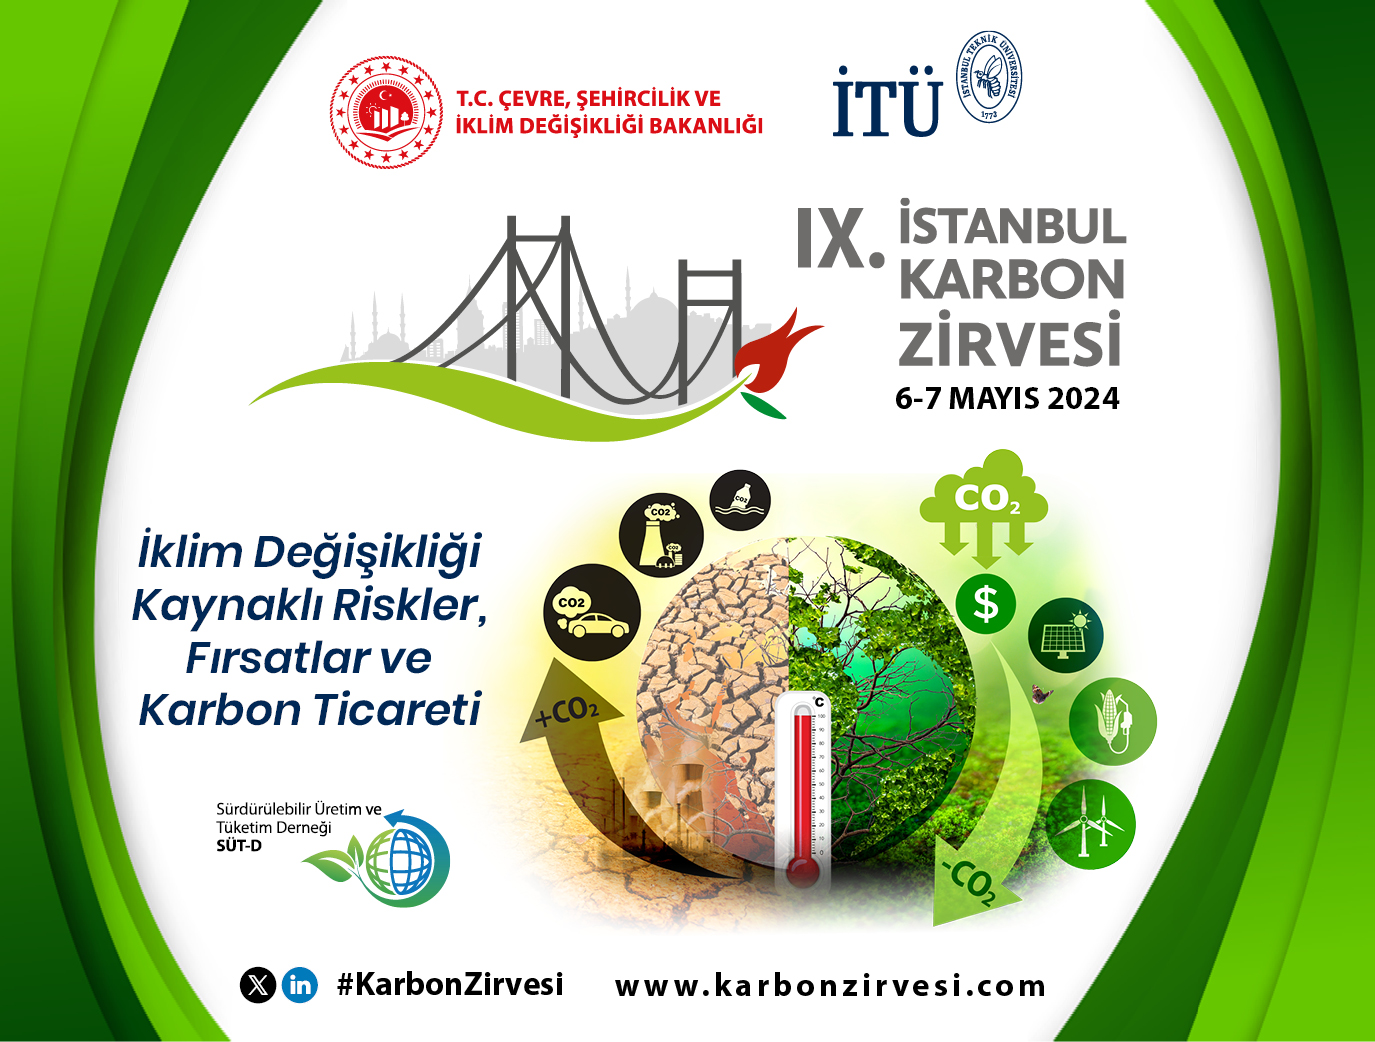 9. İstanbul Karbon Zirvesi